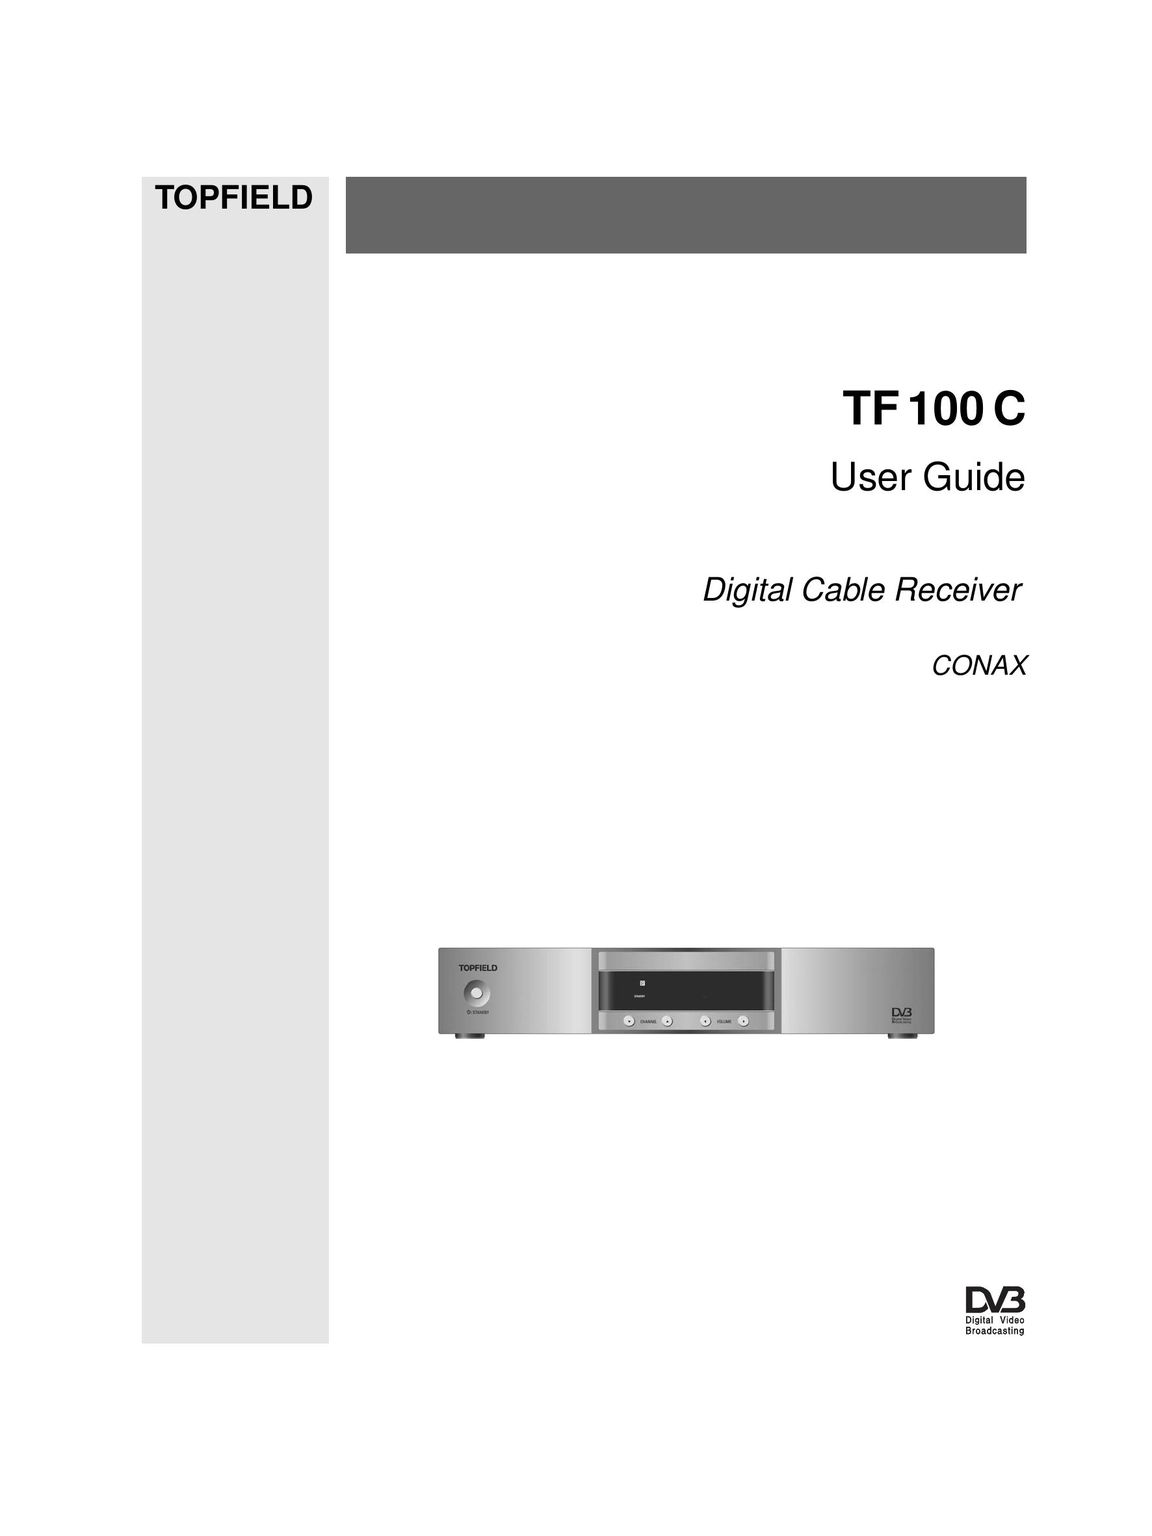 Topfield TF 100 C Cable Box User Manual